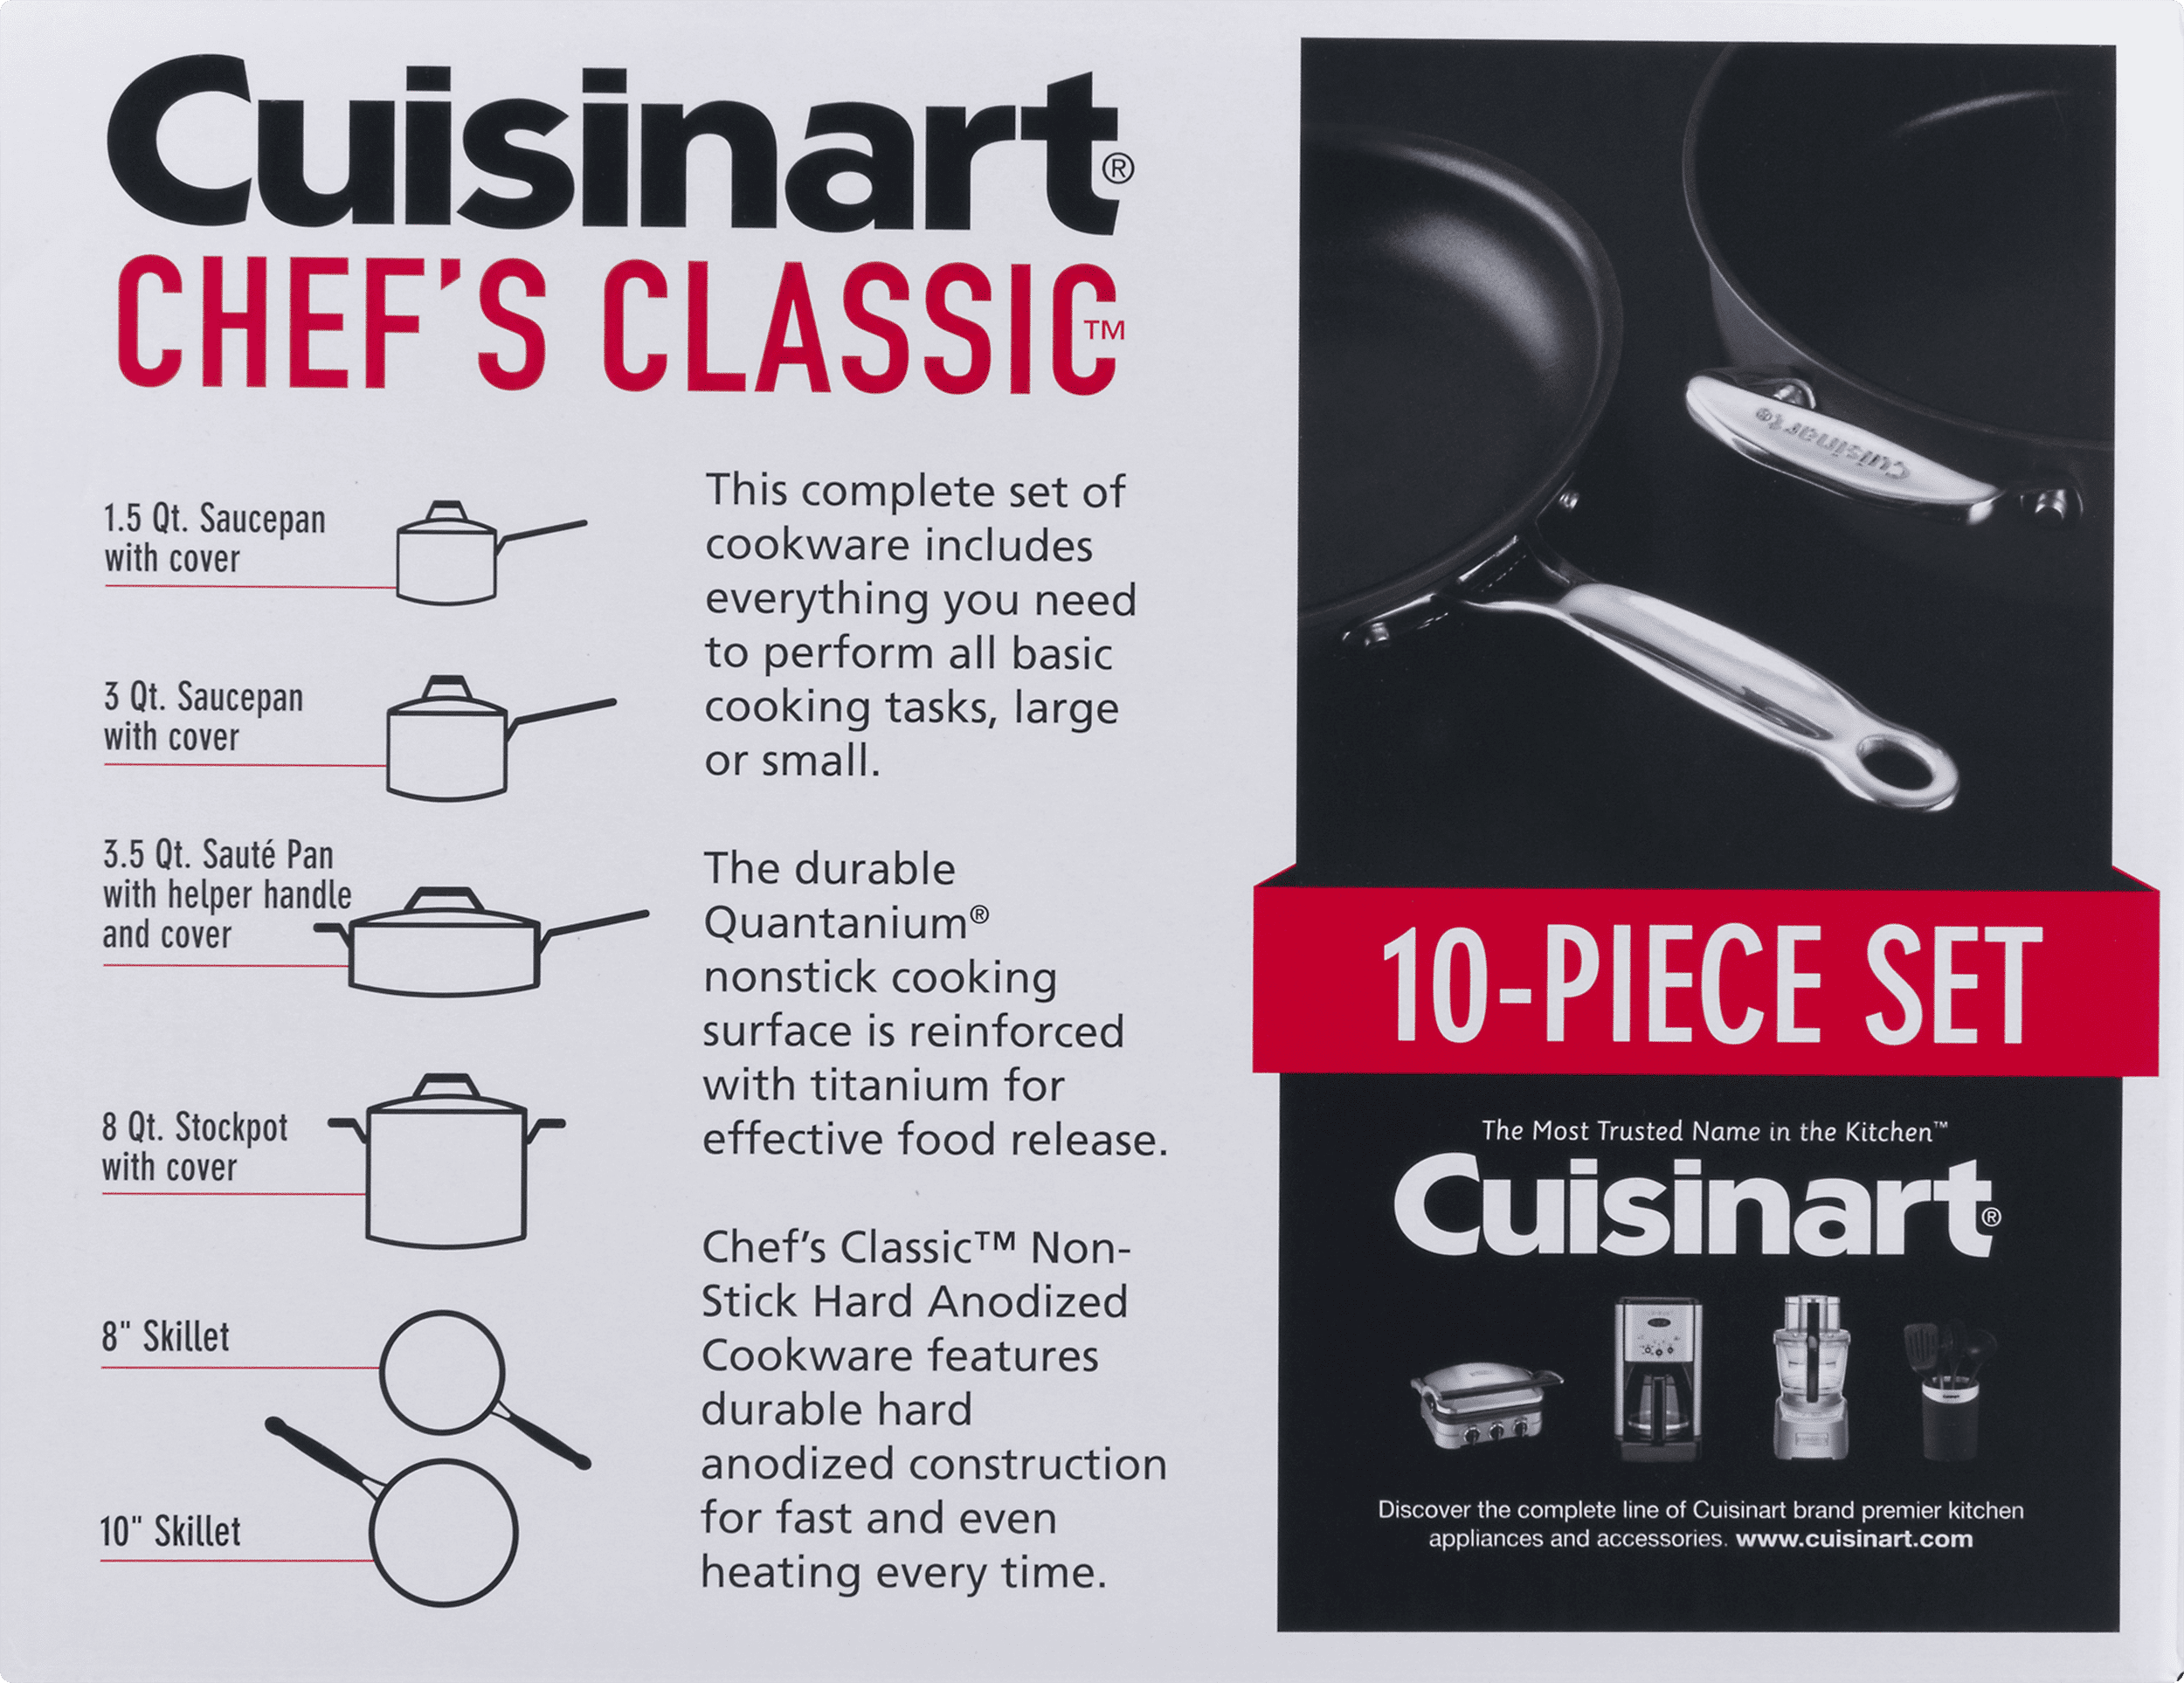 Cuisinart Chef's Classic Nonstick Hard Anodized 8 Quart Stockpot